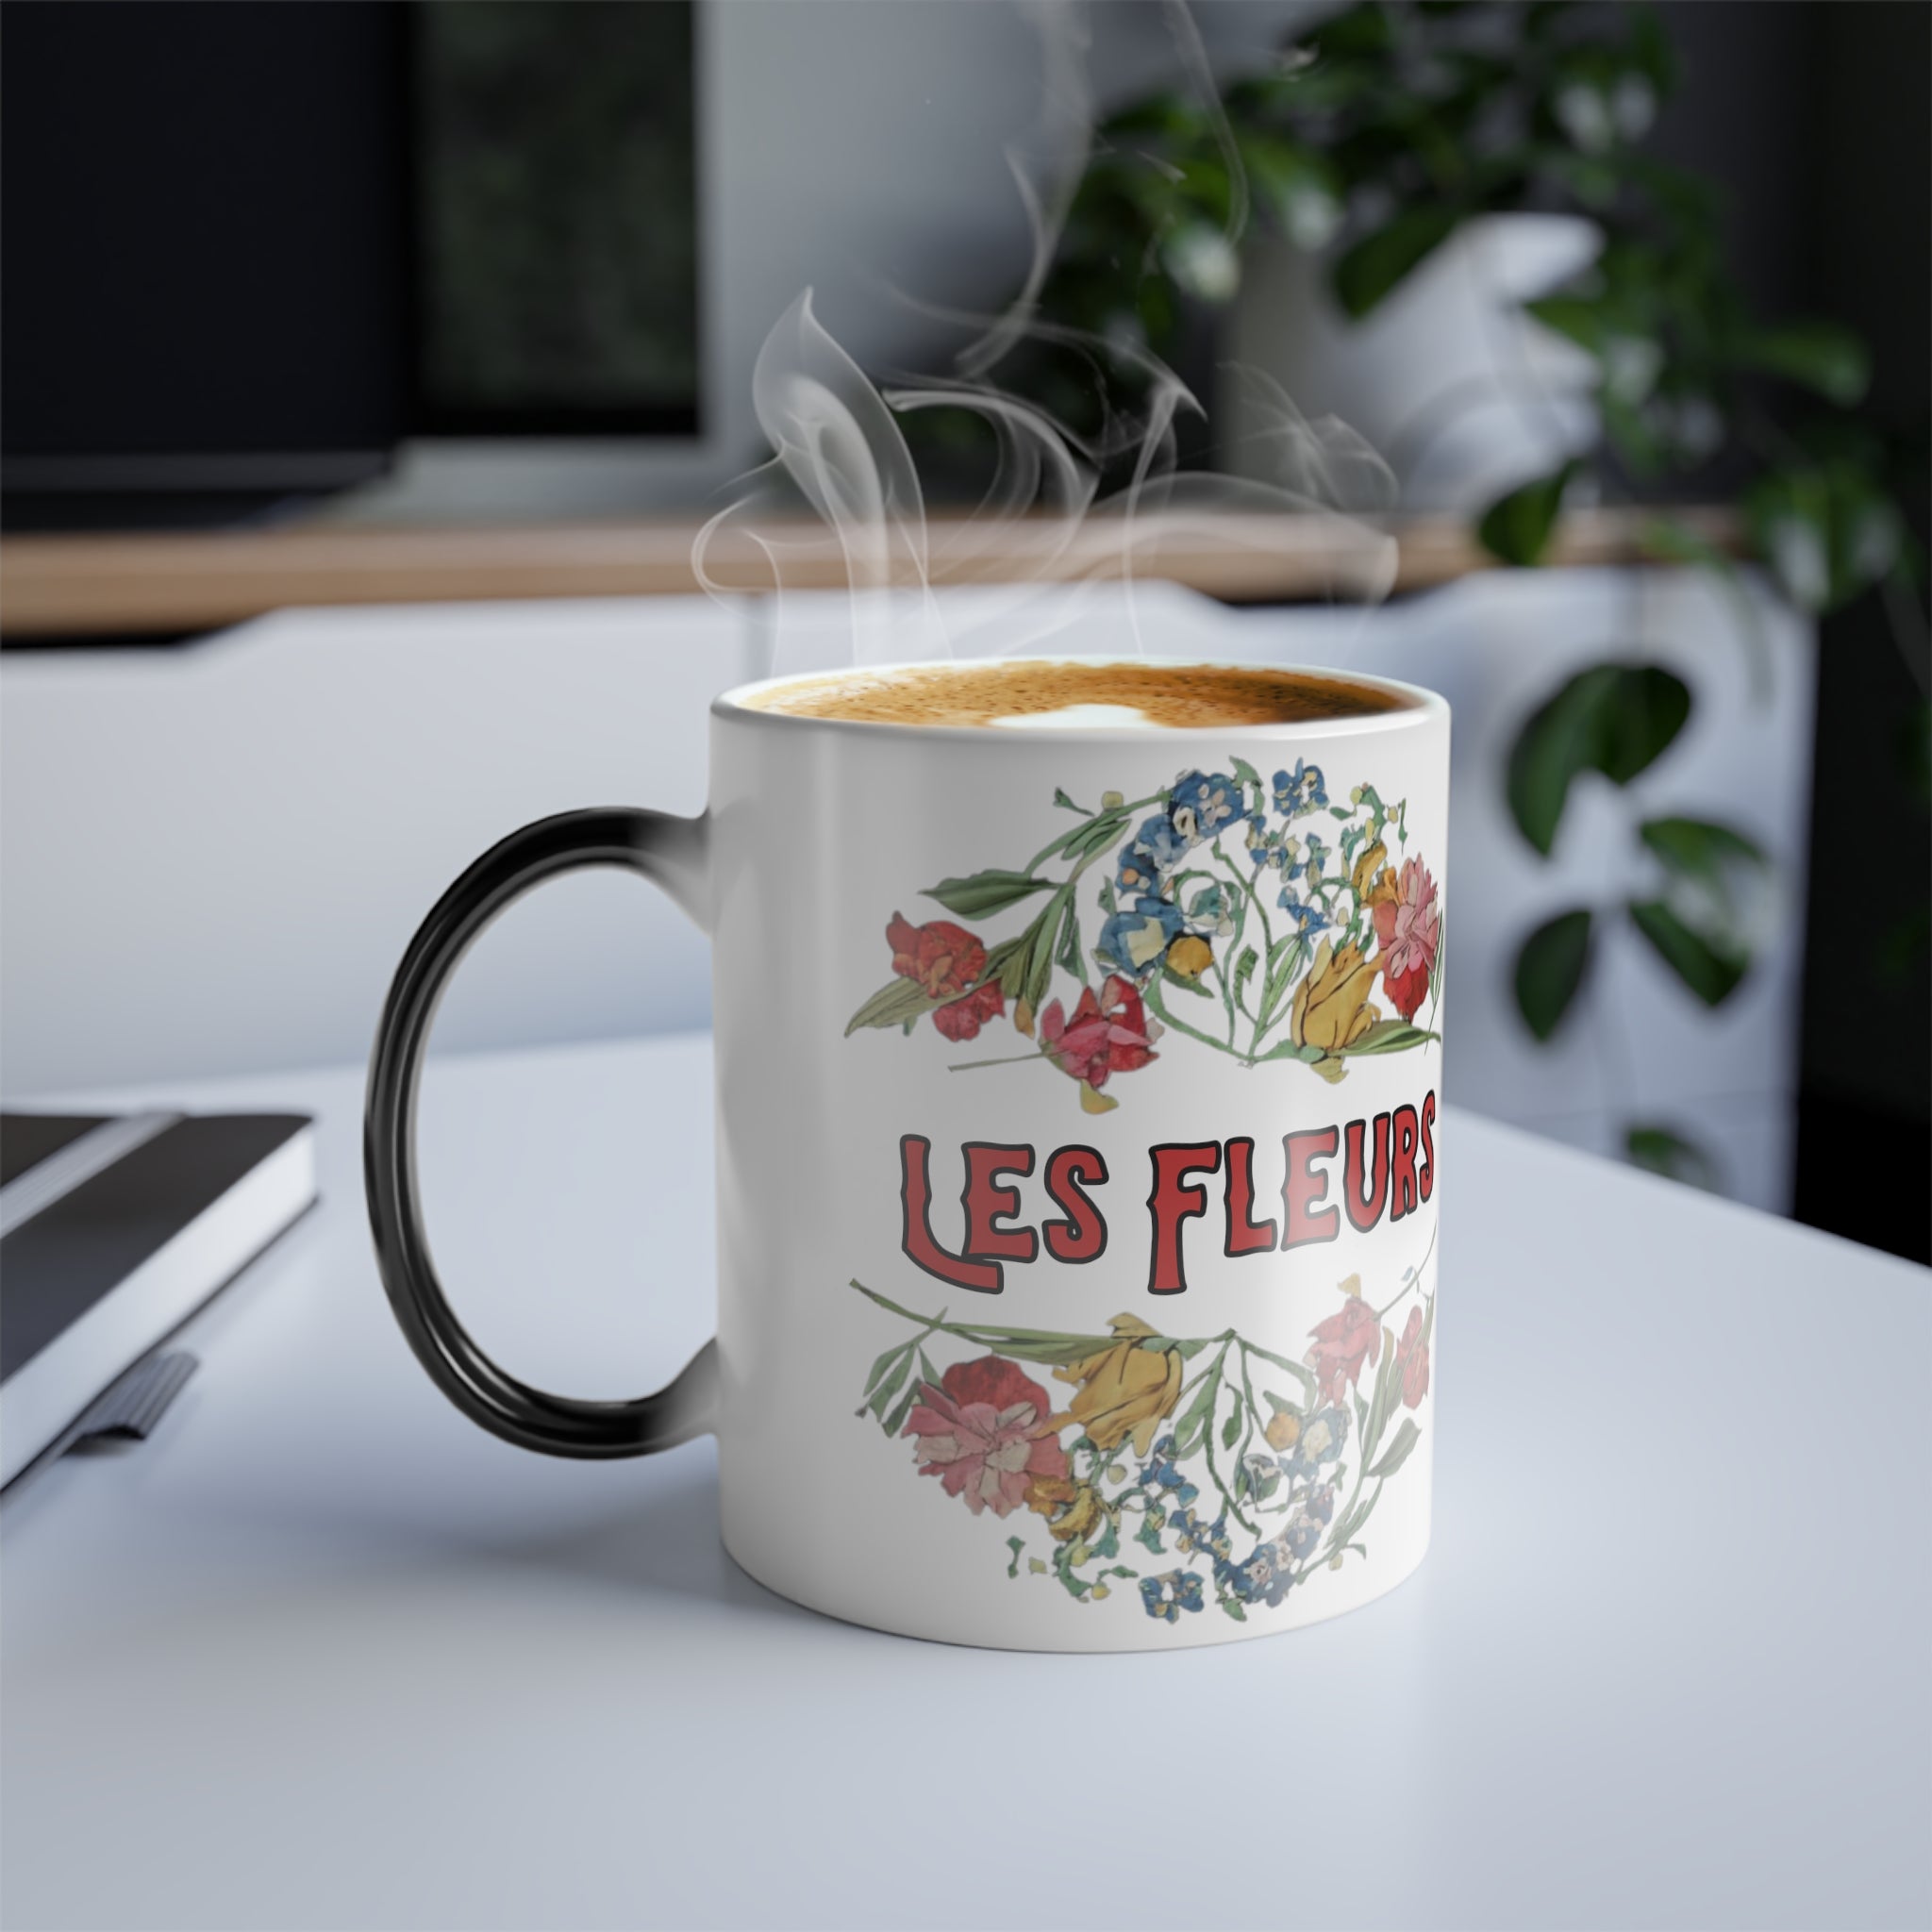 Les Flores - Color Morphing Mug, 11oz